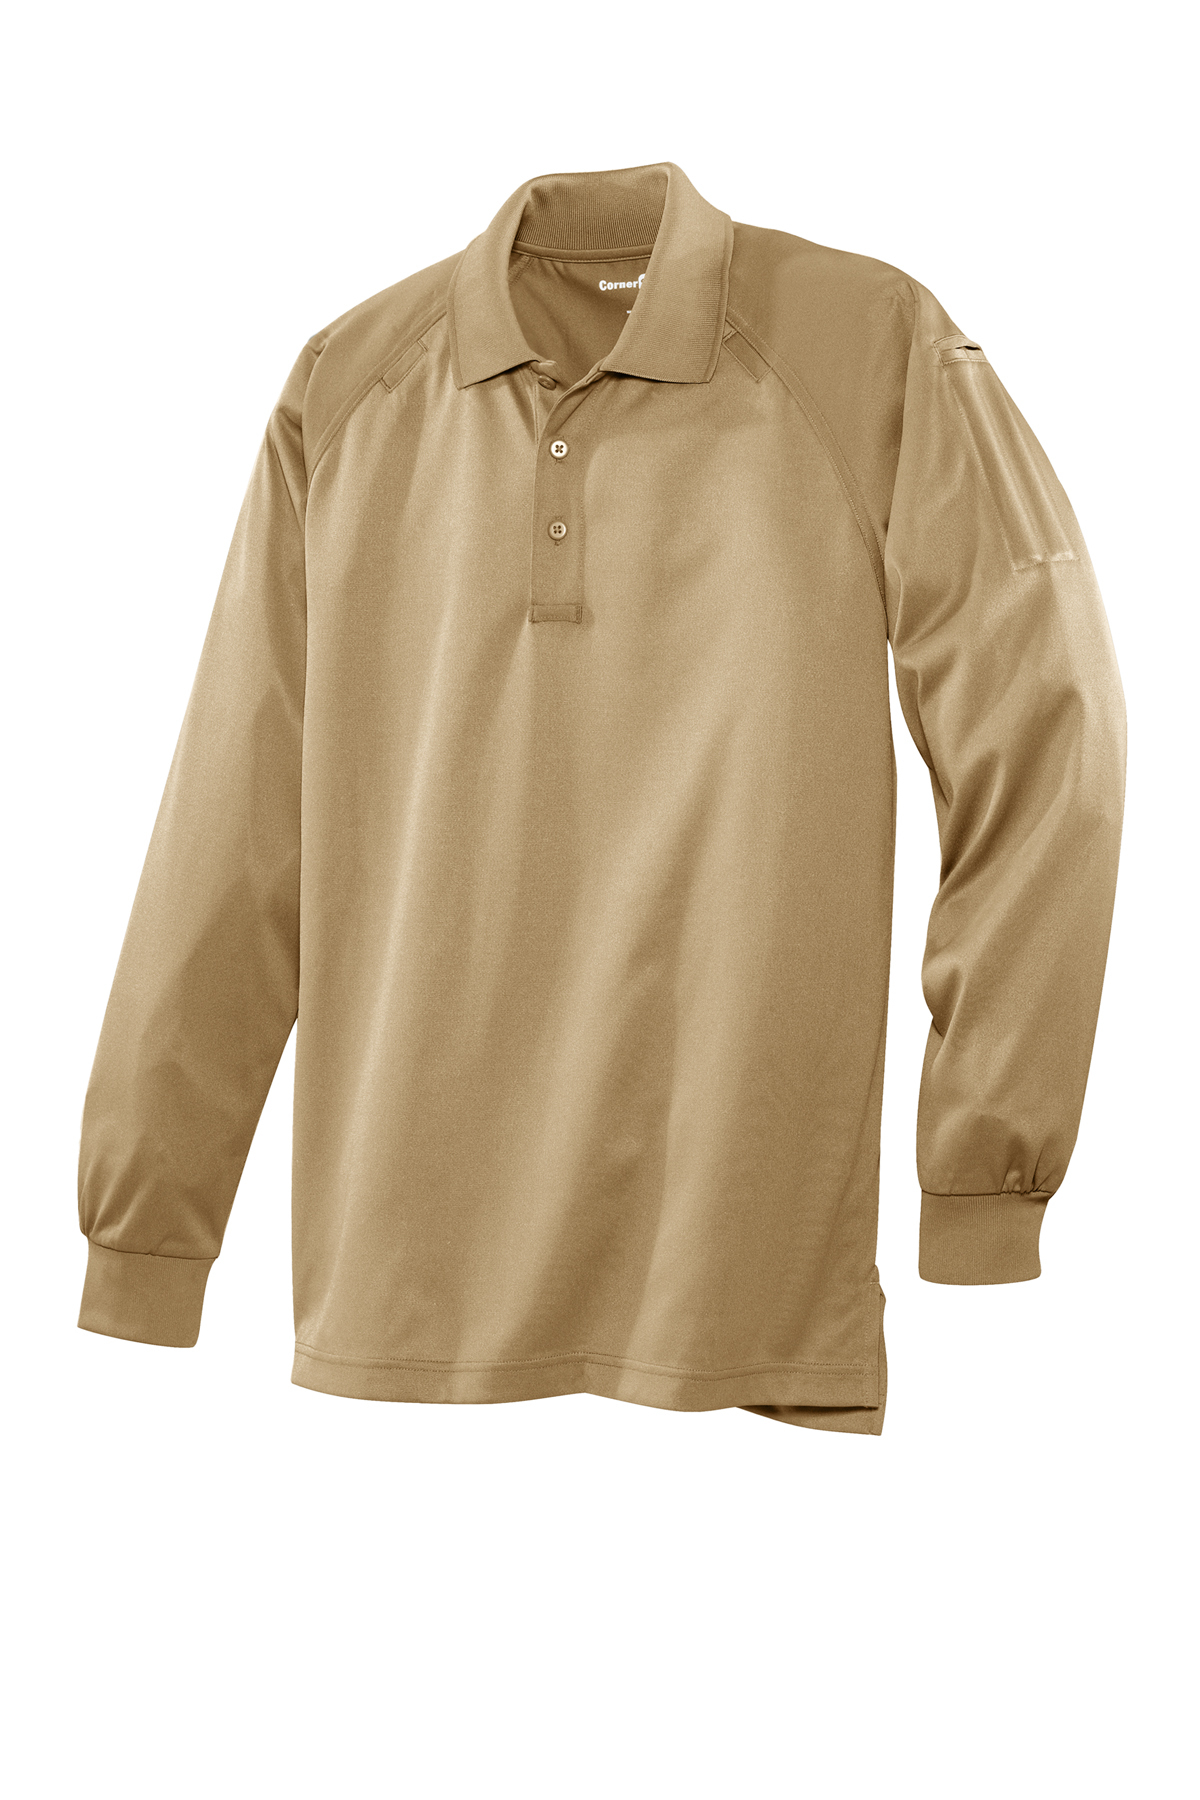 Edwards Mens Tactical Snag Proof Long Sleeve Polo Shirt XL Black